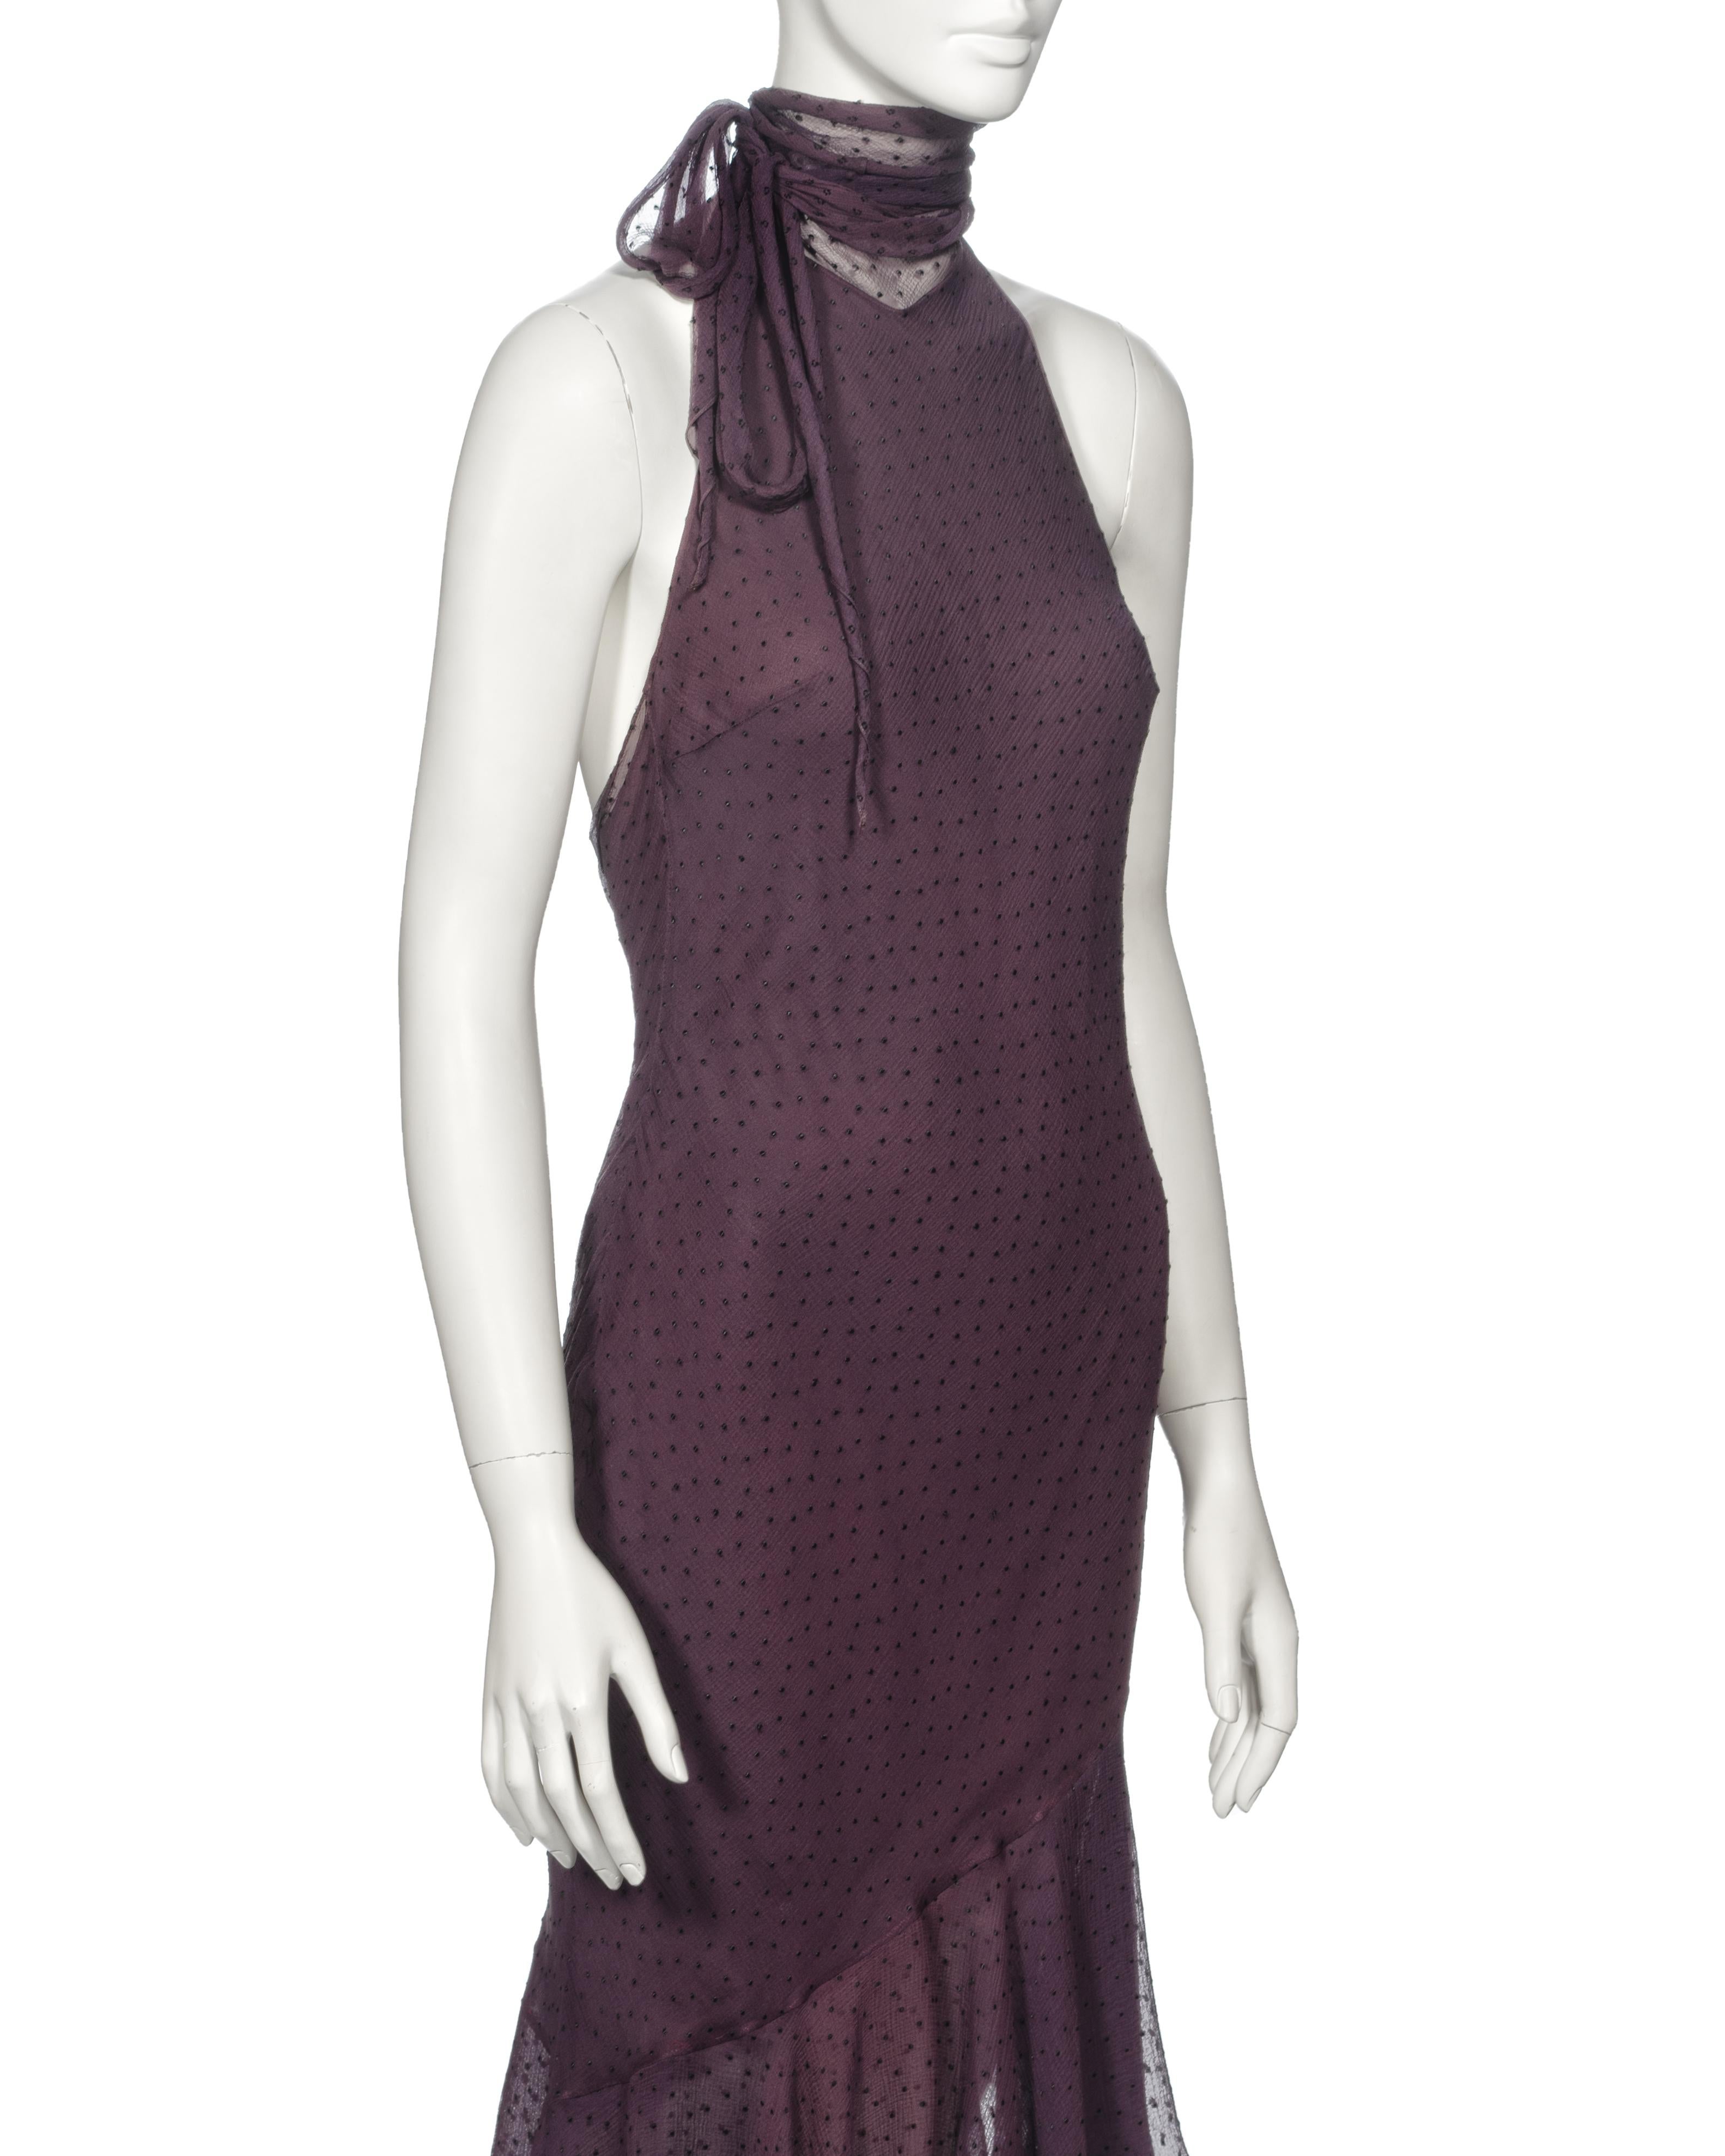 Women's Christian Dior by John Galliano Purple Silk Jacquard Cocktail Dress, fw 2000